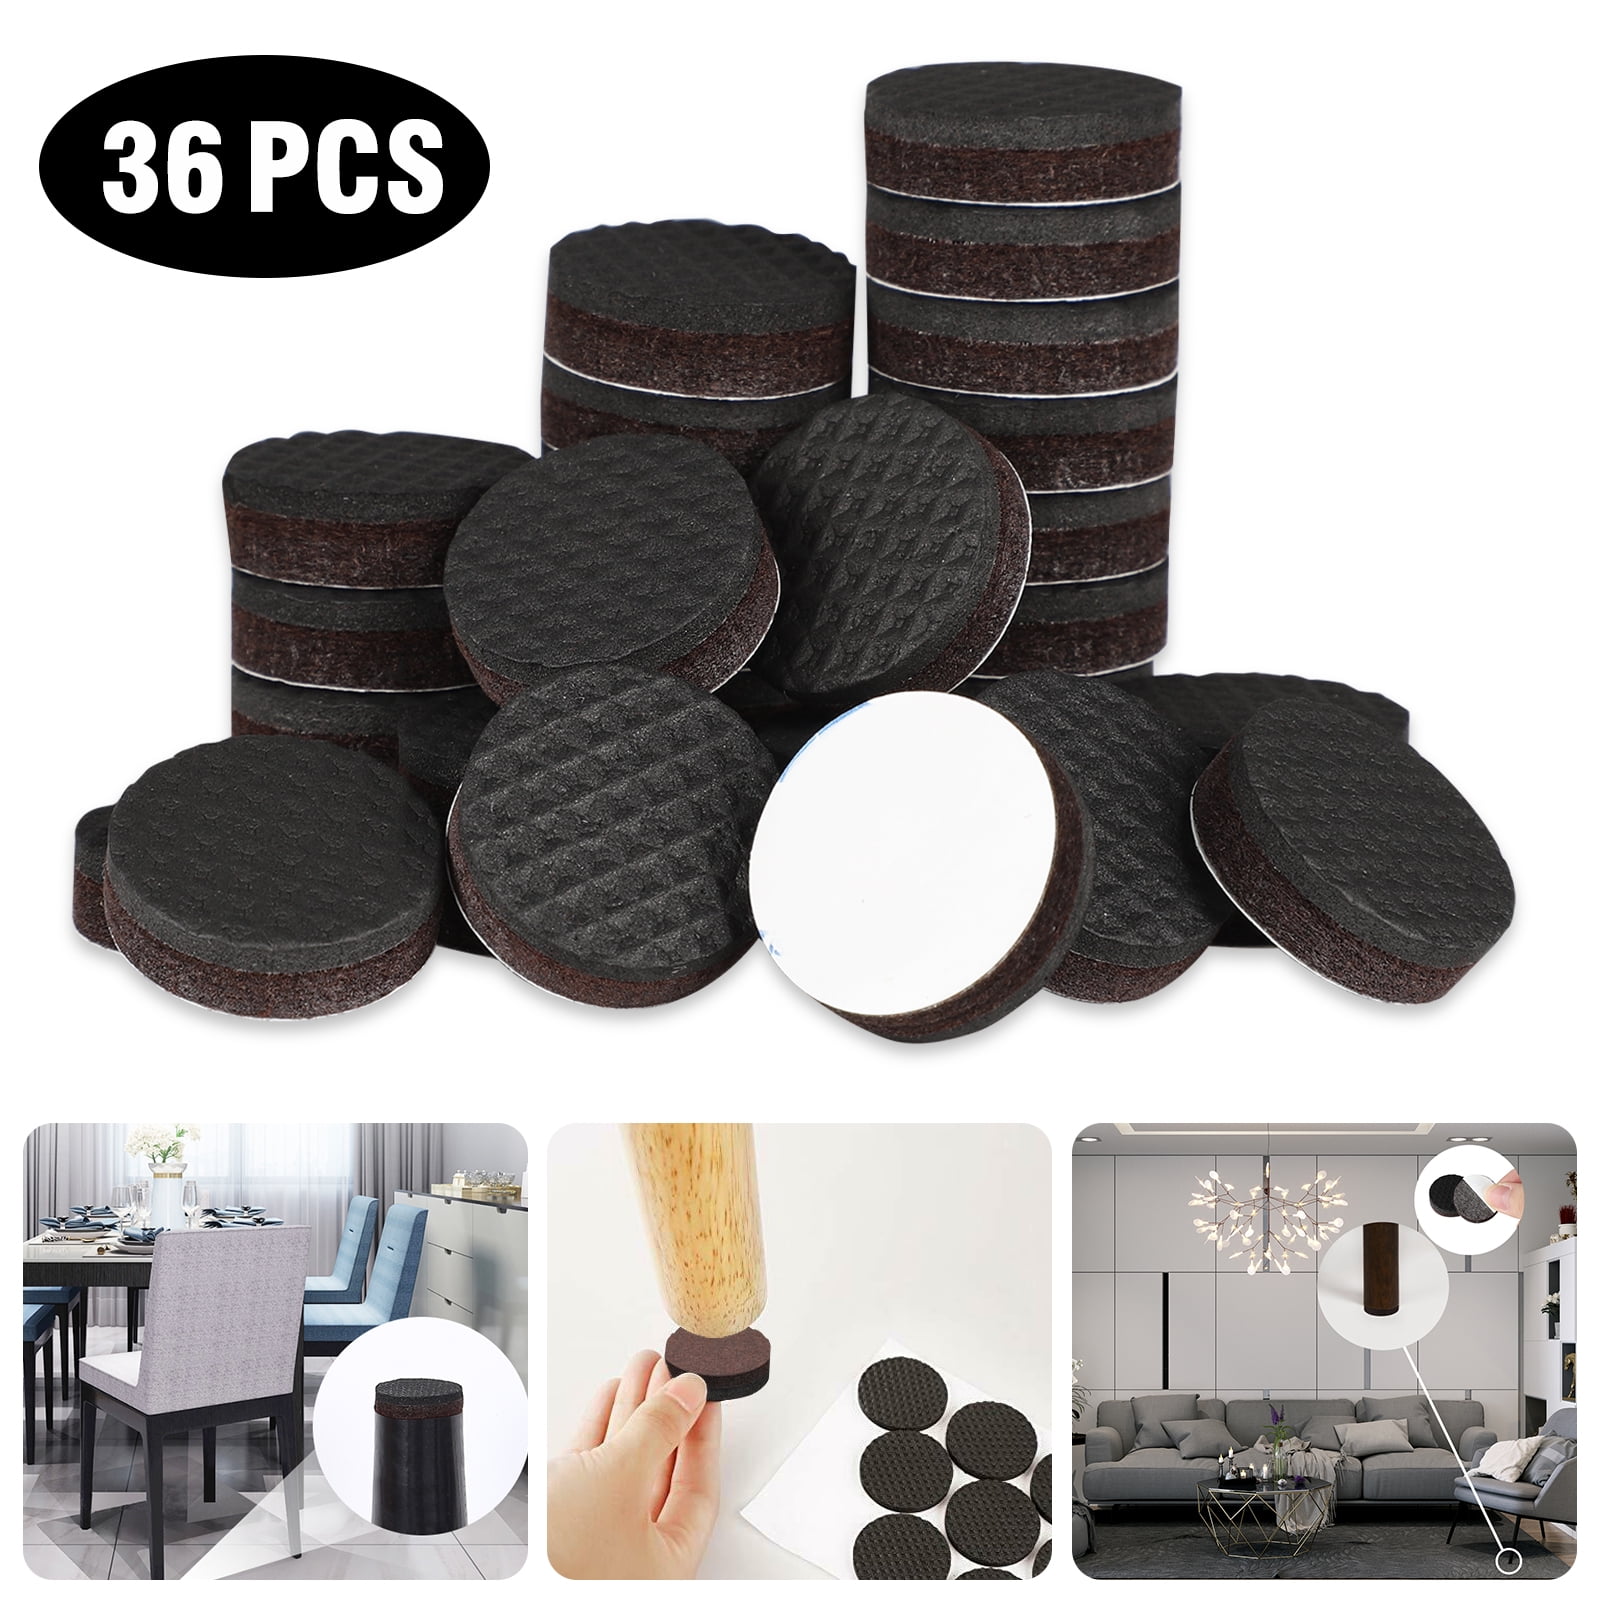 Details about   10Pcs Non-slip Rubber Feet Protector Pads Furniture Instrument Case Bumper RAS 